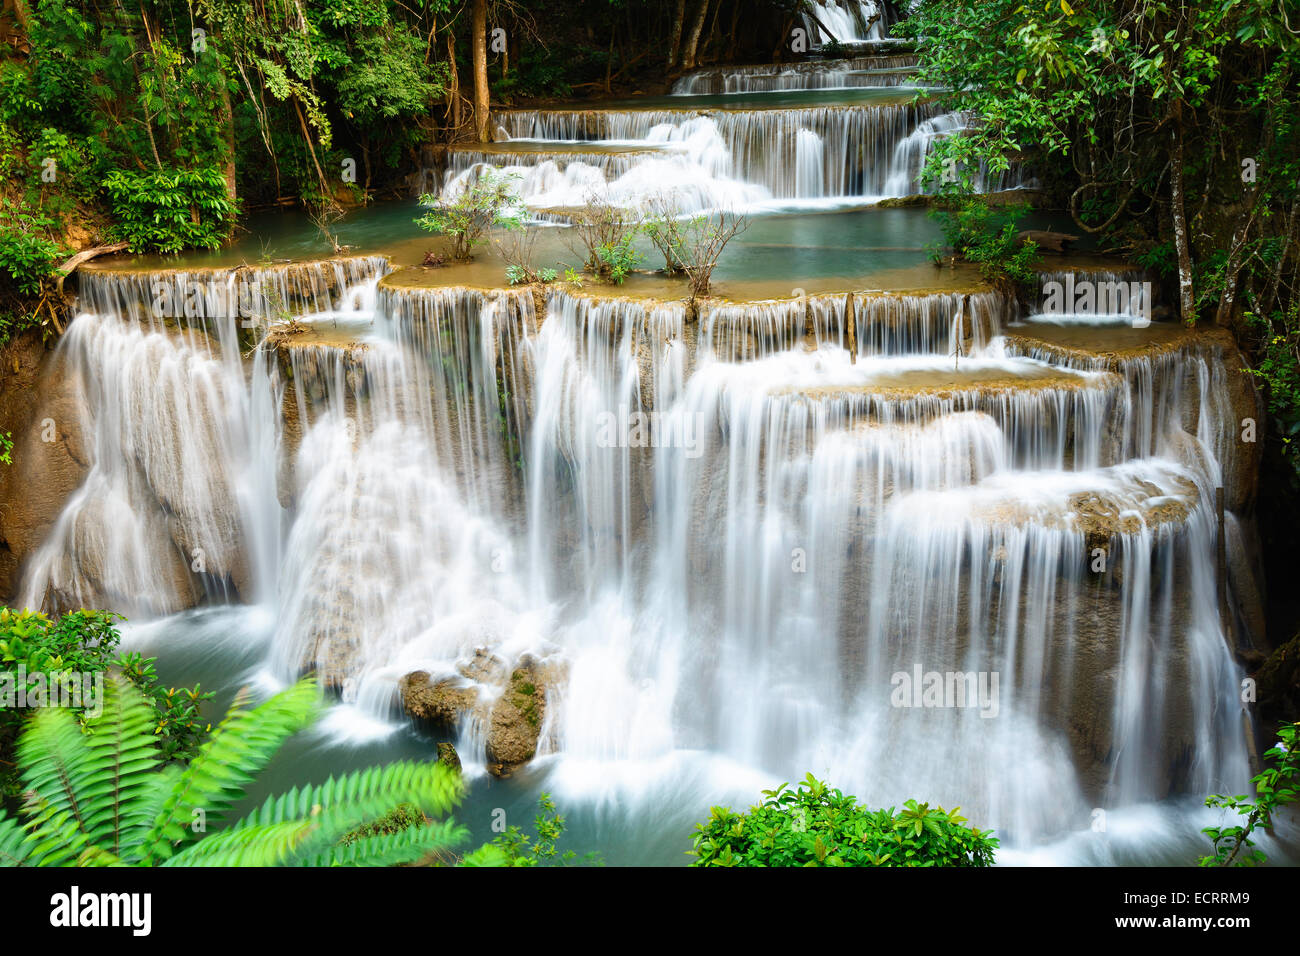 Huaymaekamin Wasserfall, Station vier Namen Chat Kaew, im tiefen Regenwald Dschungel, Kanchanaburi, Thailand Stockfoto